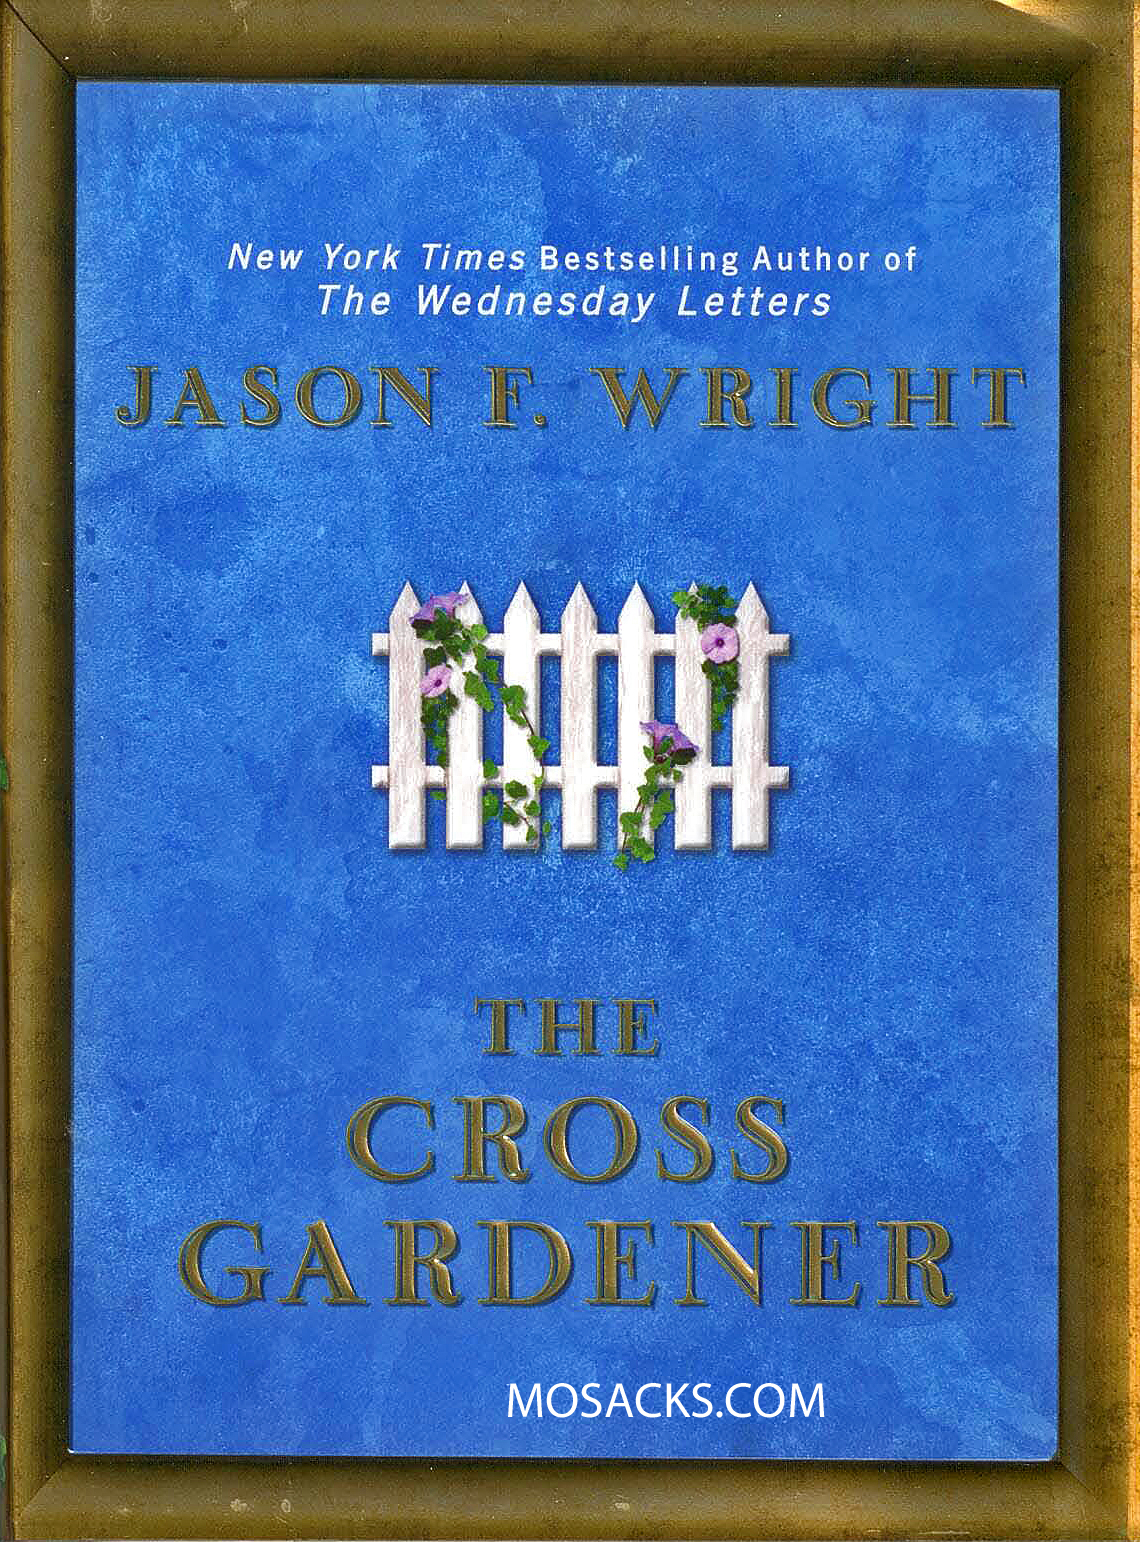 The Cross Gardener by Jason F. Wright 9780425238851